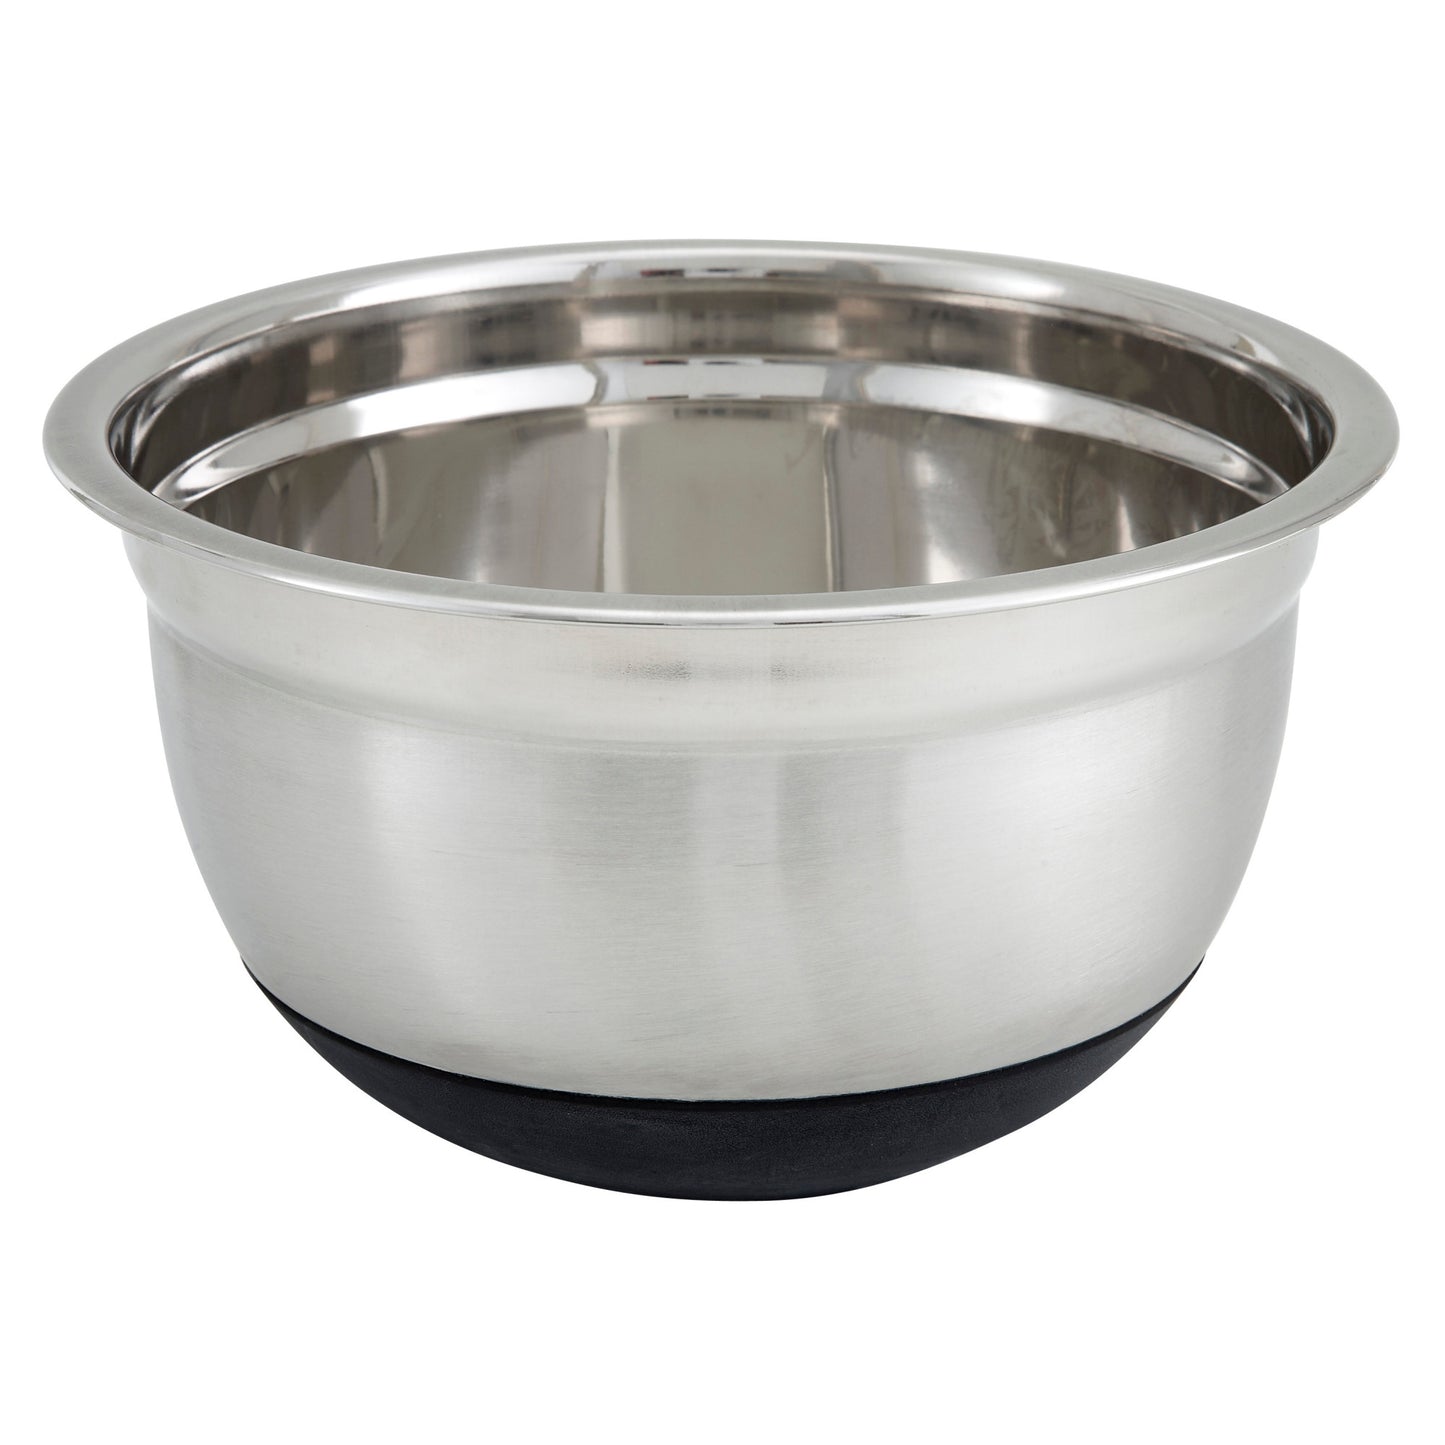 MXRU-150 - Mixing Bowl, Silicone Base, Stainless Steel - 1-1/2 Quart